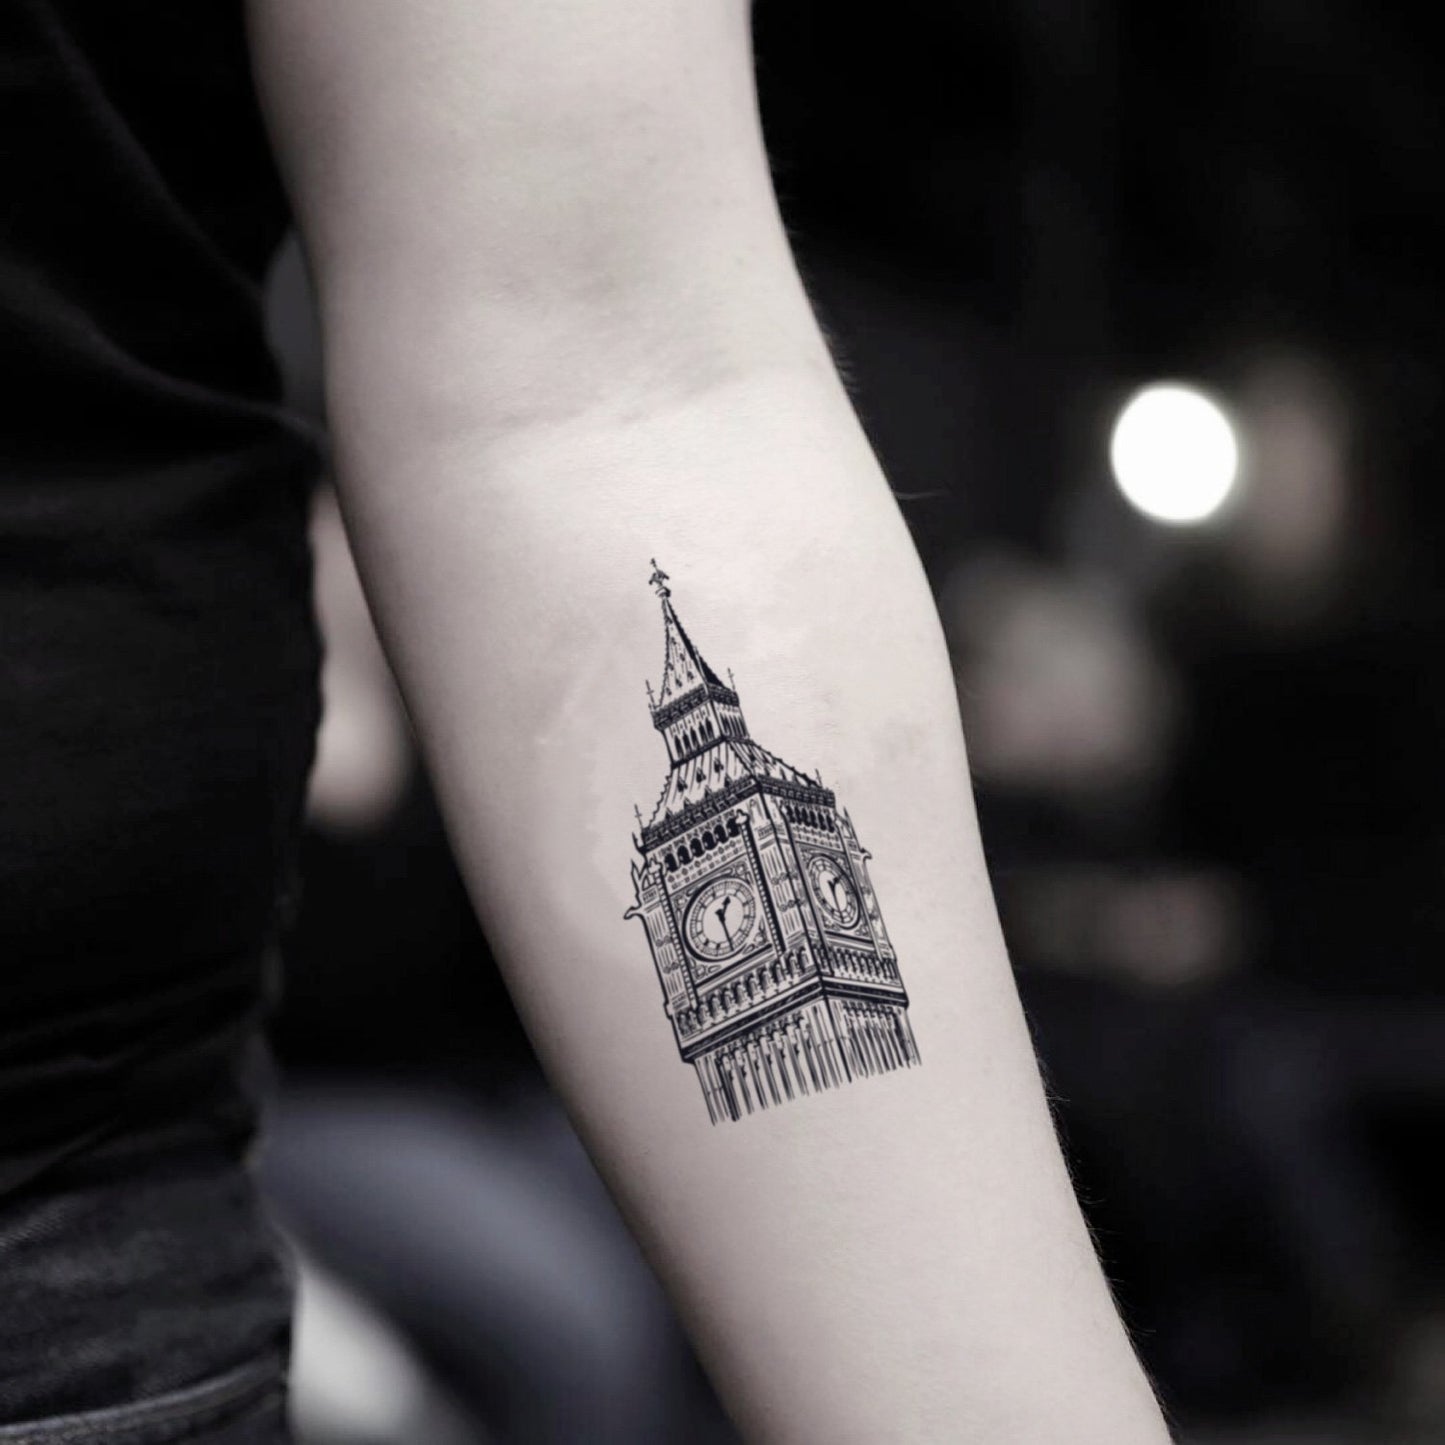 fake small big ben clock tower illustrative temporary tattoo sticker design idea on inner arm